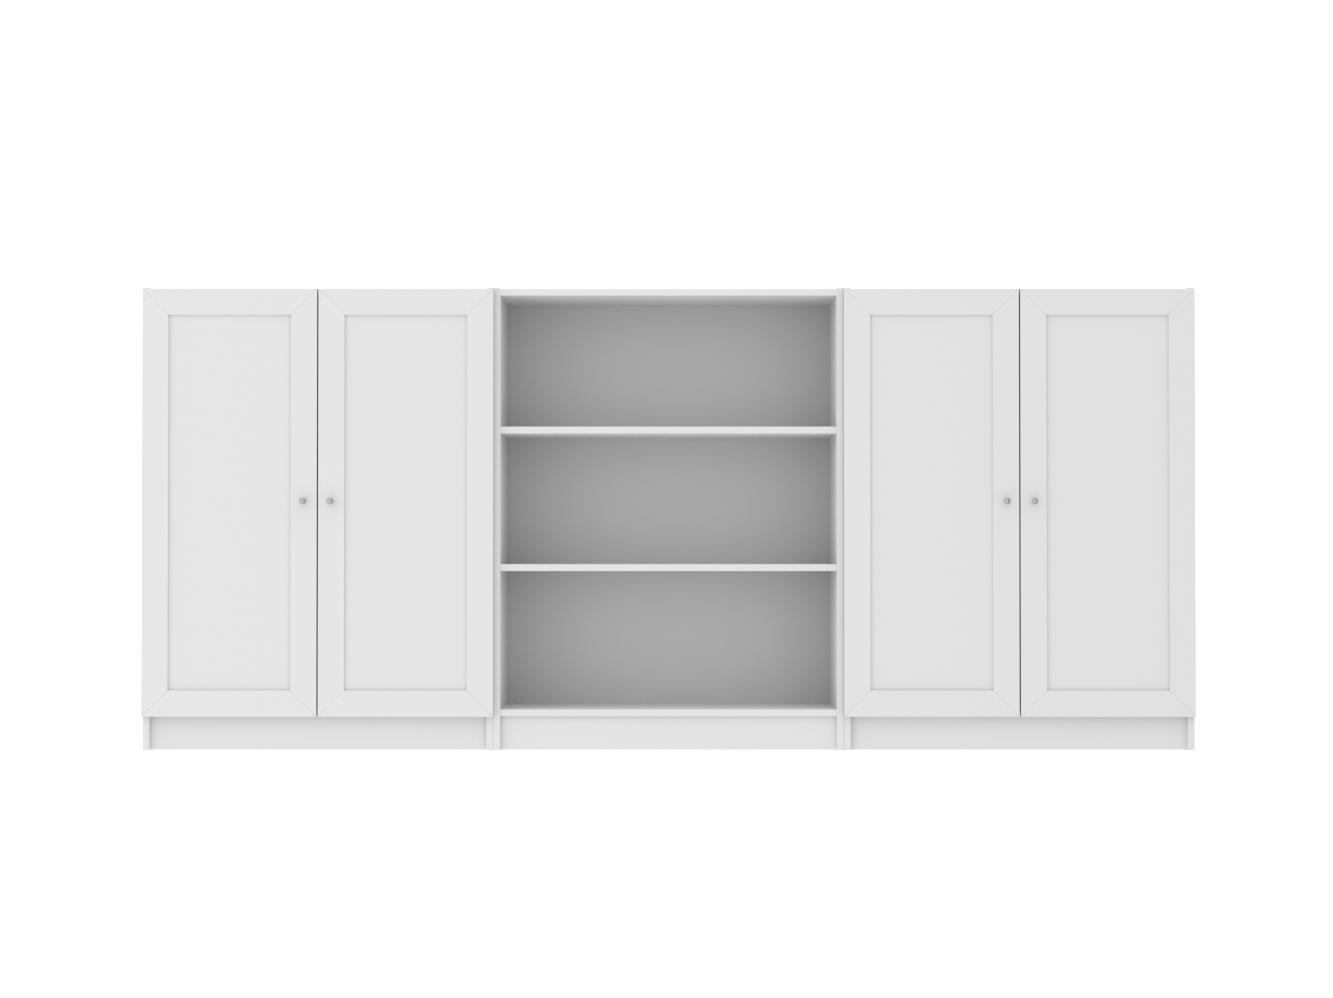 Изображение товара Комод Билли 211 white ИКЕА (IKEA), 240x30x106 см на сайте adeta.ru